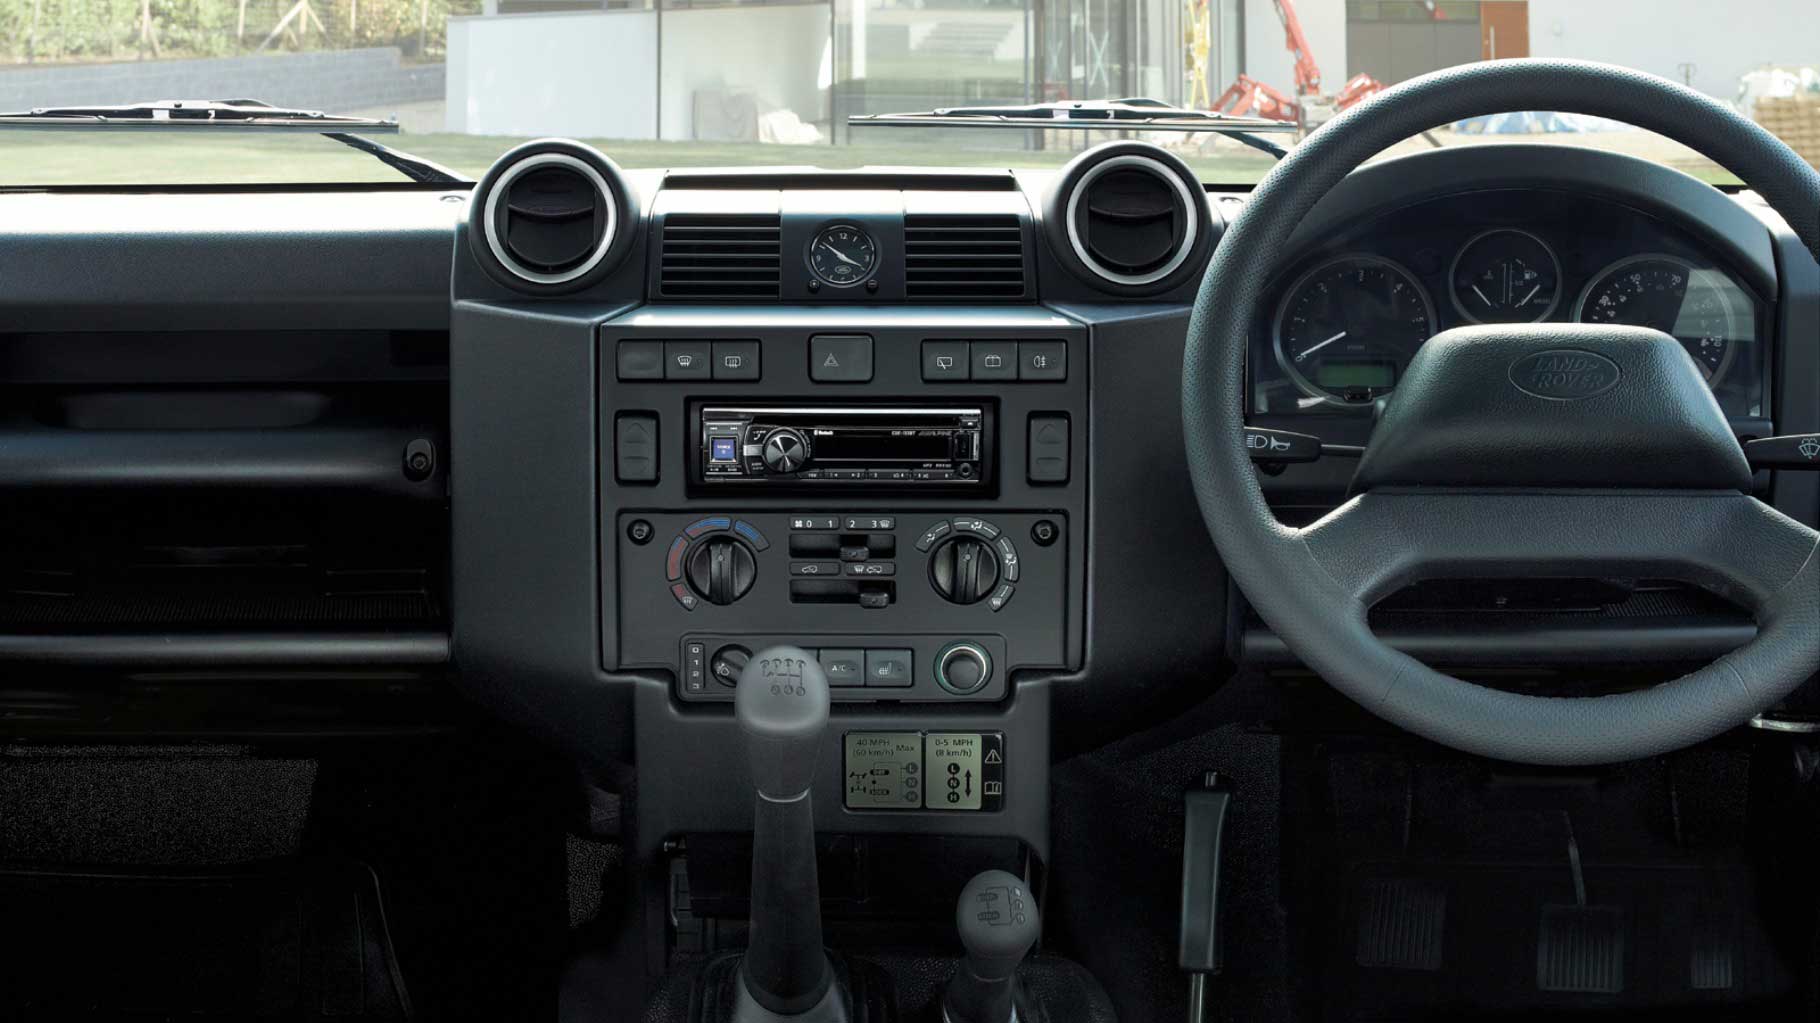 Land Rover Defender 130 interior 